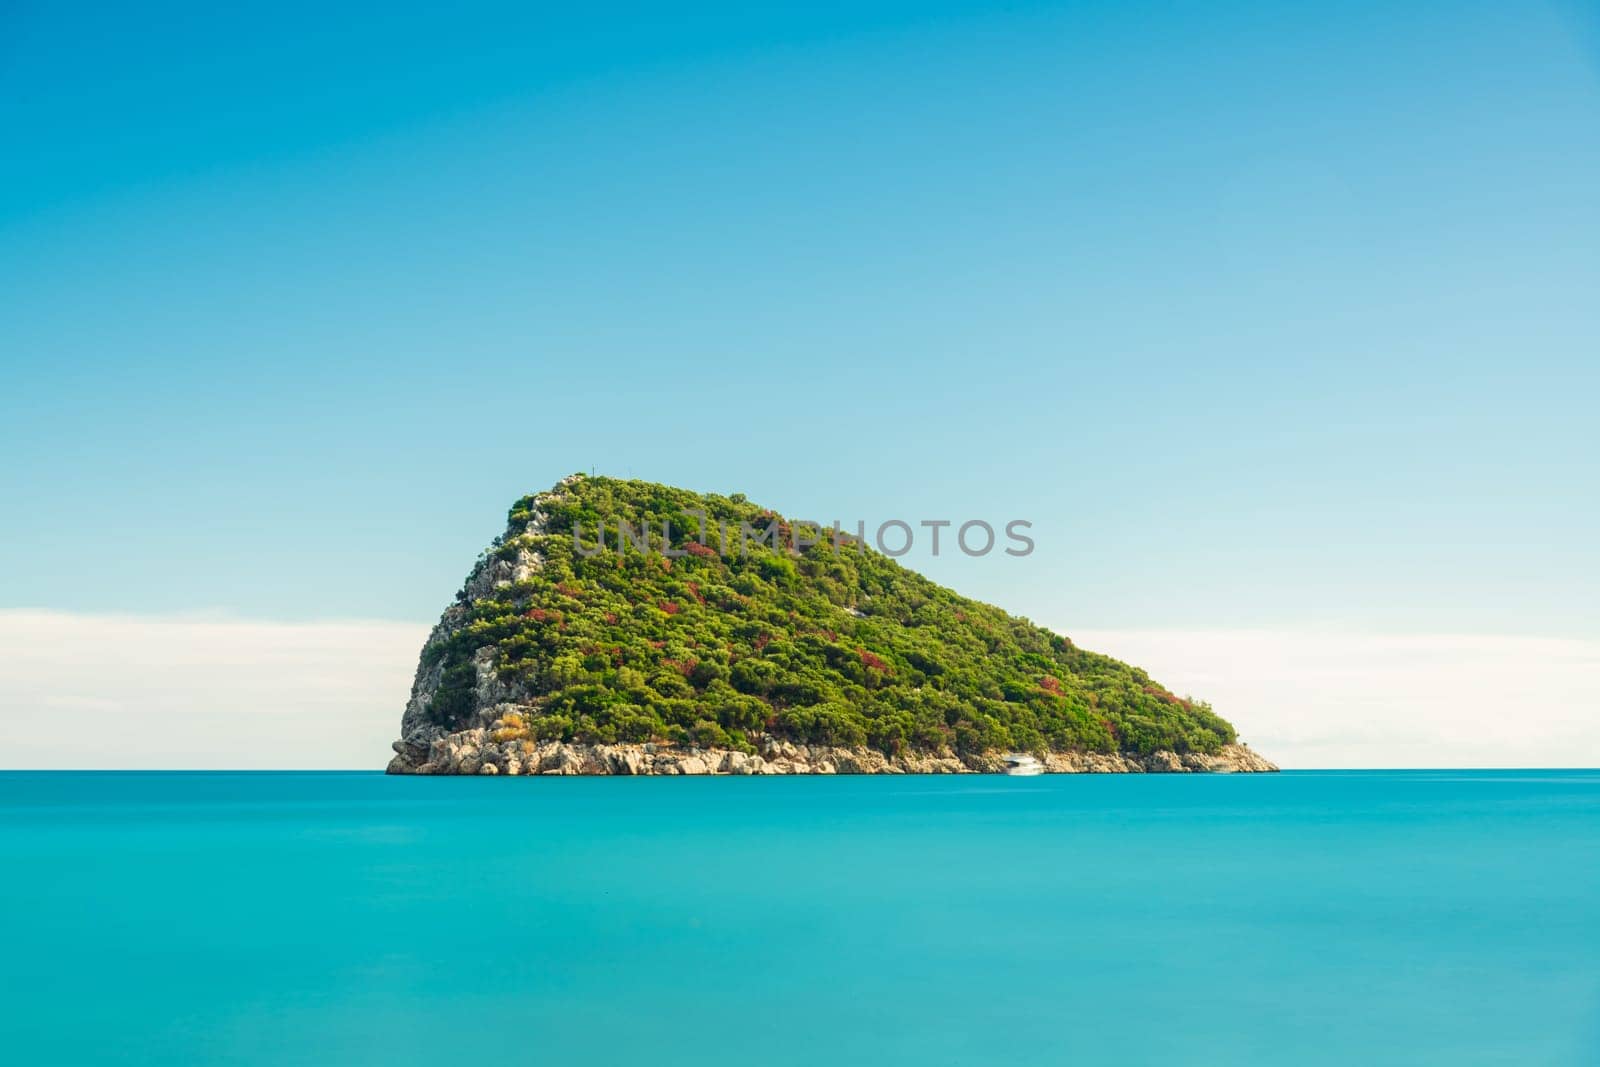 Long exposure photo of Antalya Sican Island with the beach